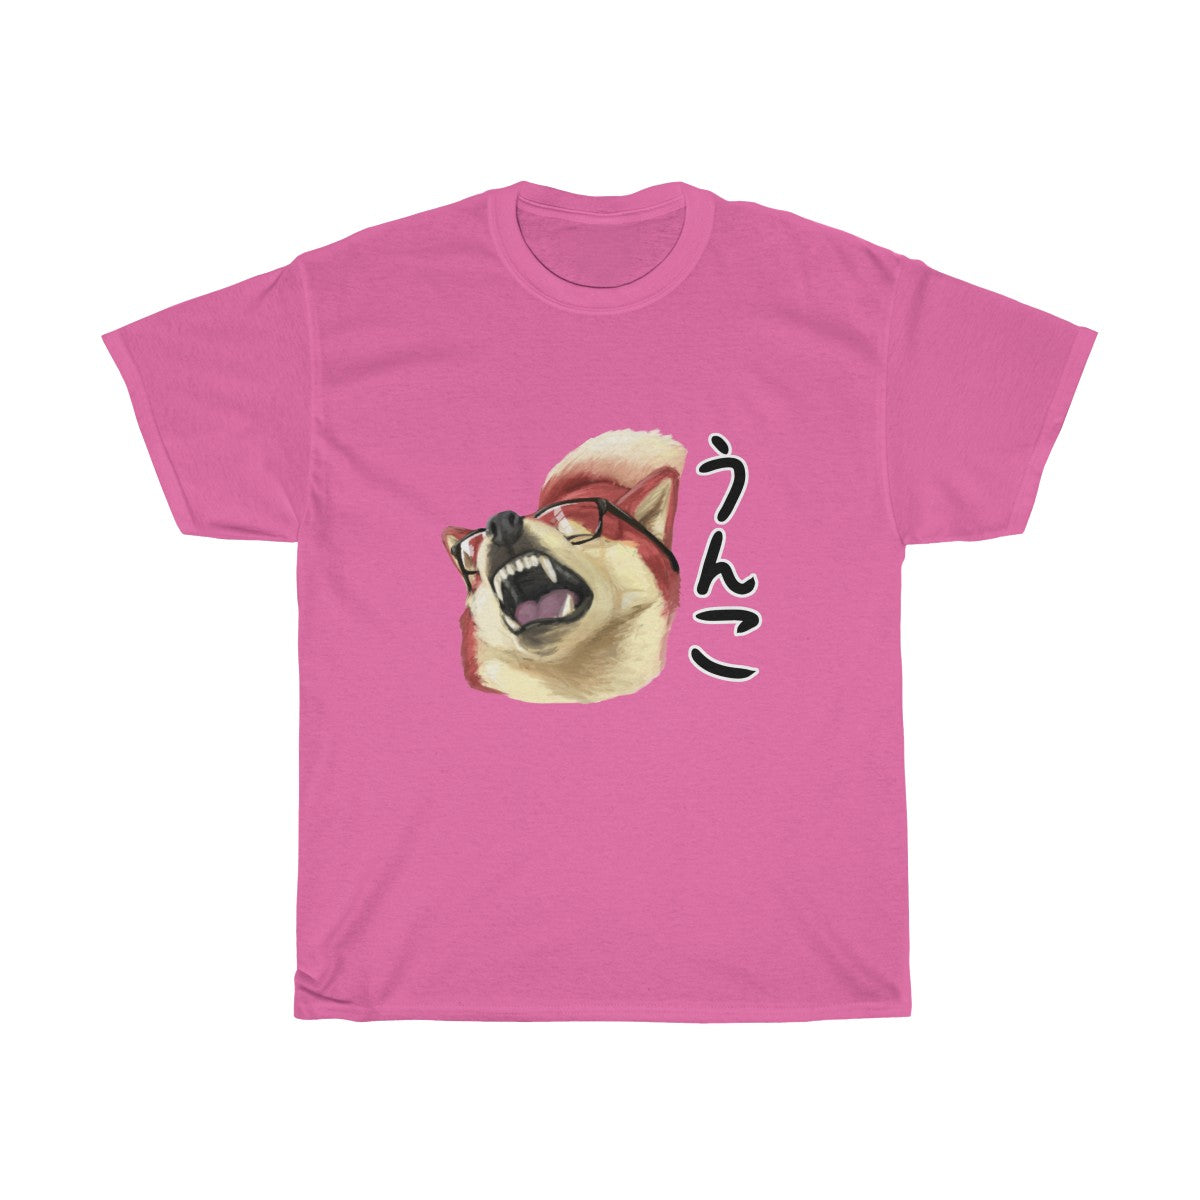 Unko - T-Shirt T-Shirt Ooka Pink S 